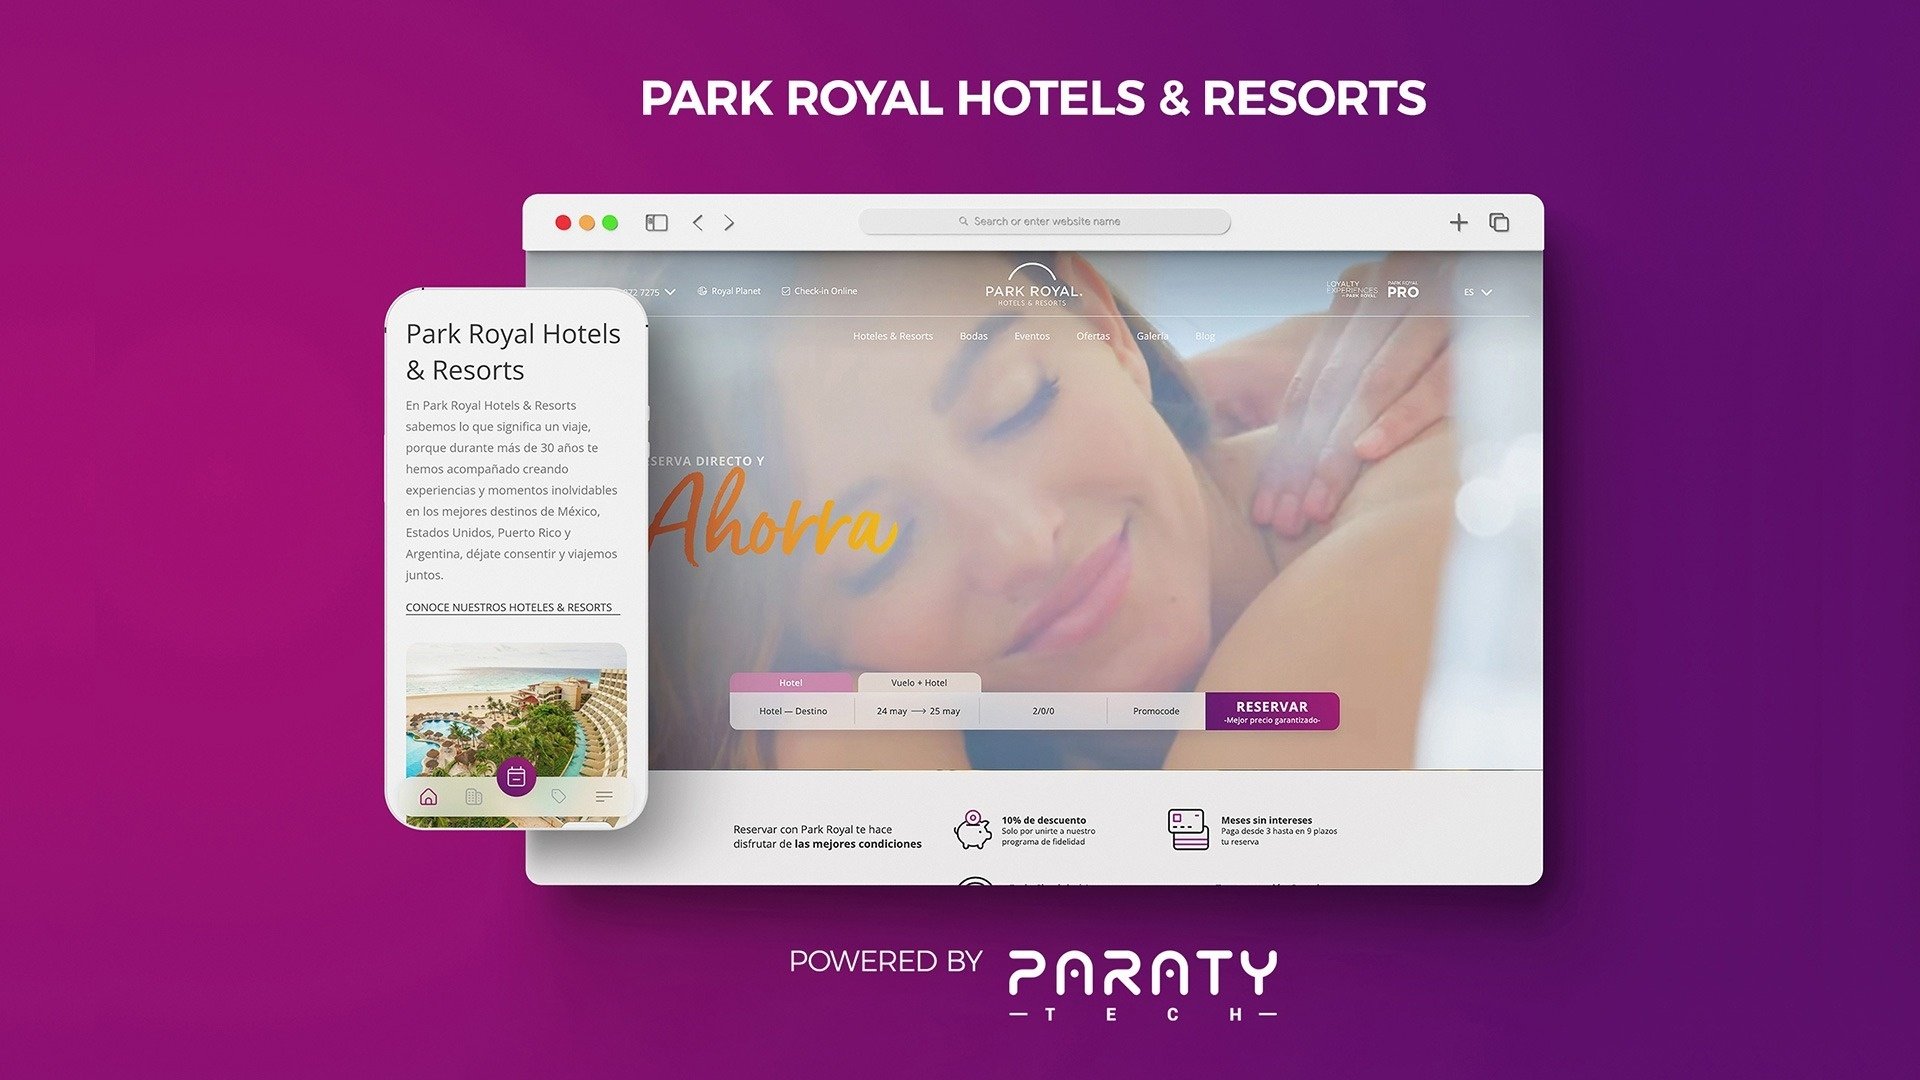 Park Royal Hotels & Resorts escolhe a Paraty Tech para potenciar o seu canal directo